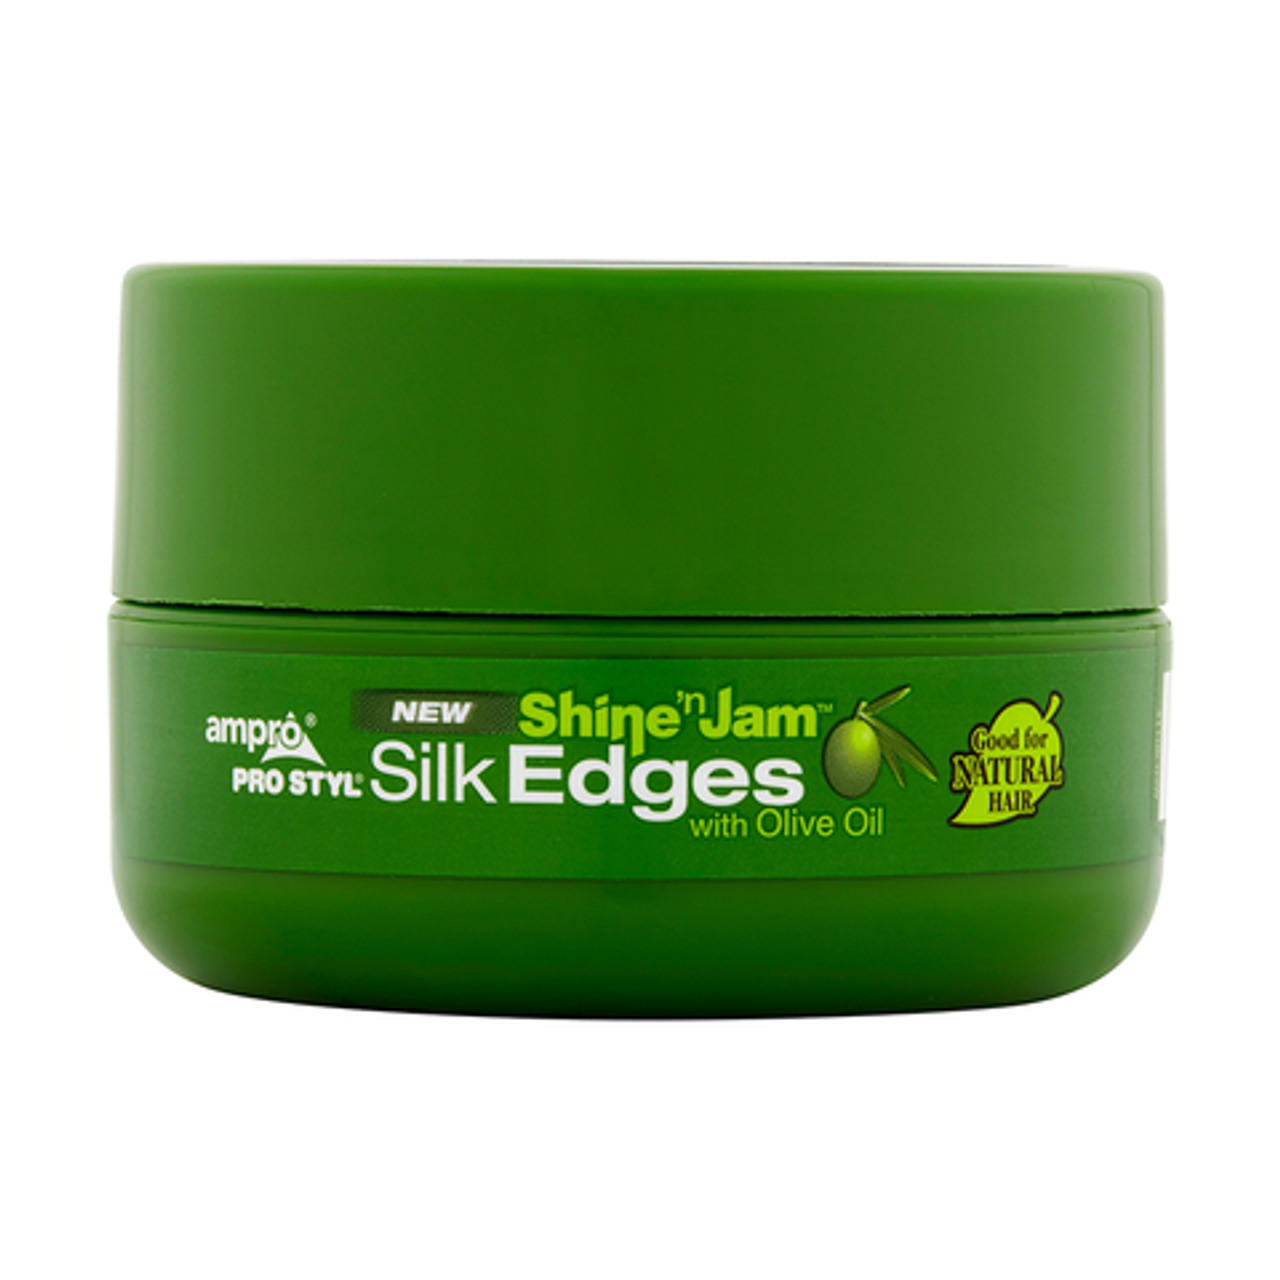  Murray's Edge wax Premium Shine Hair Styling Gel, 4